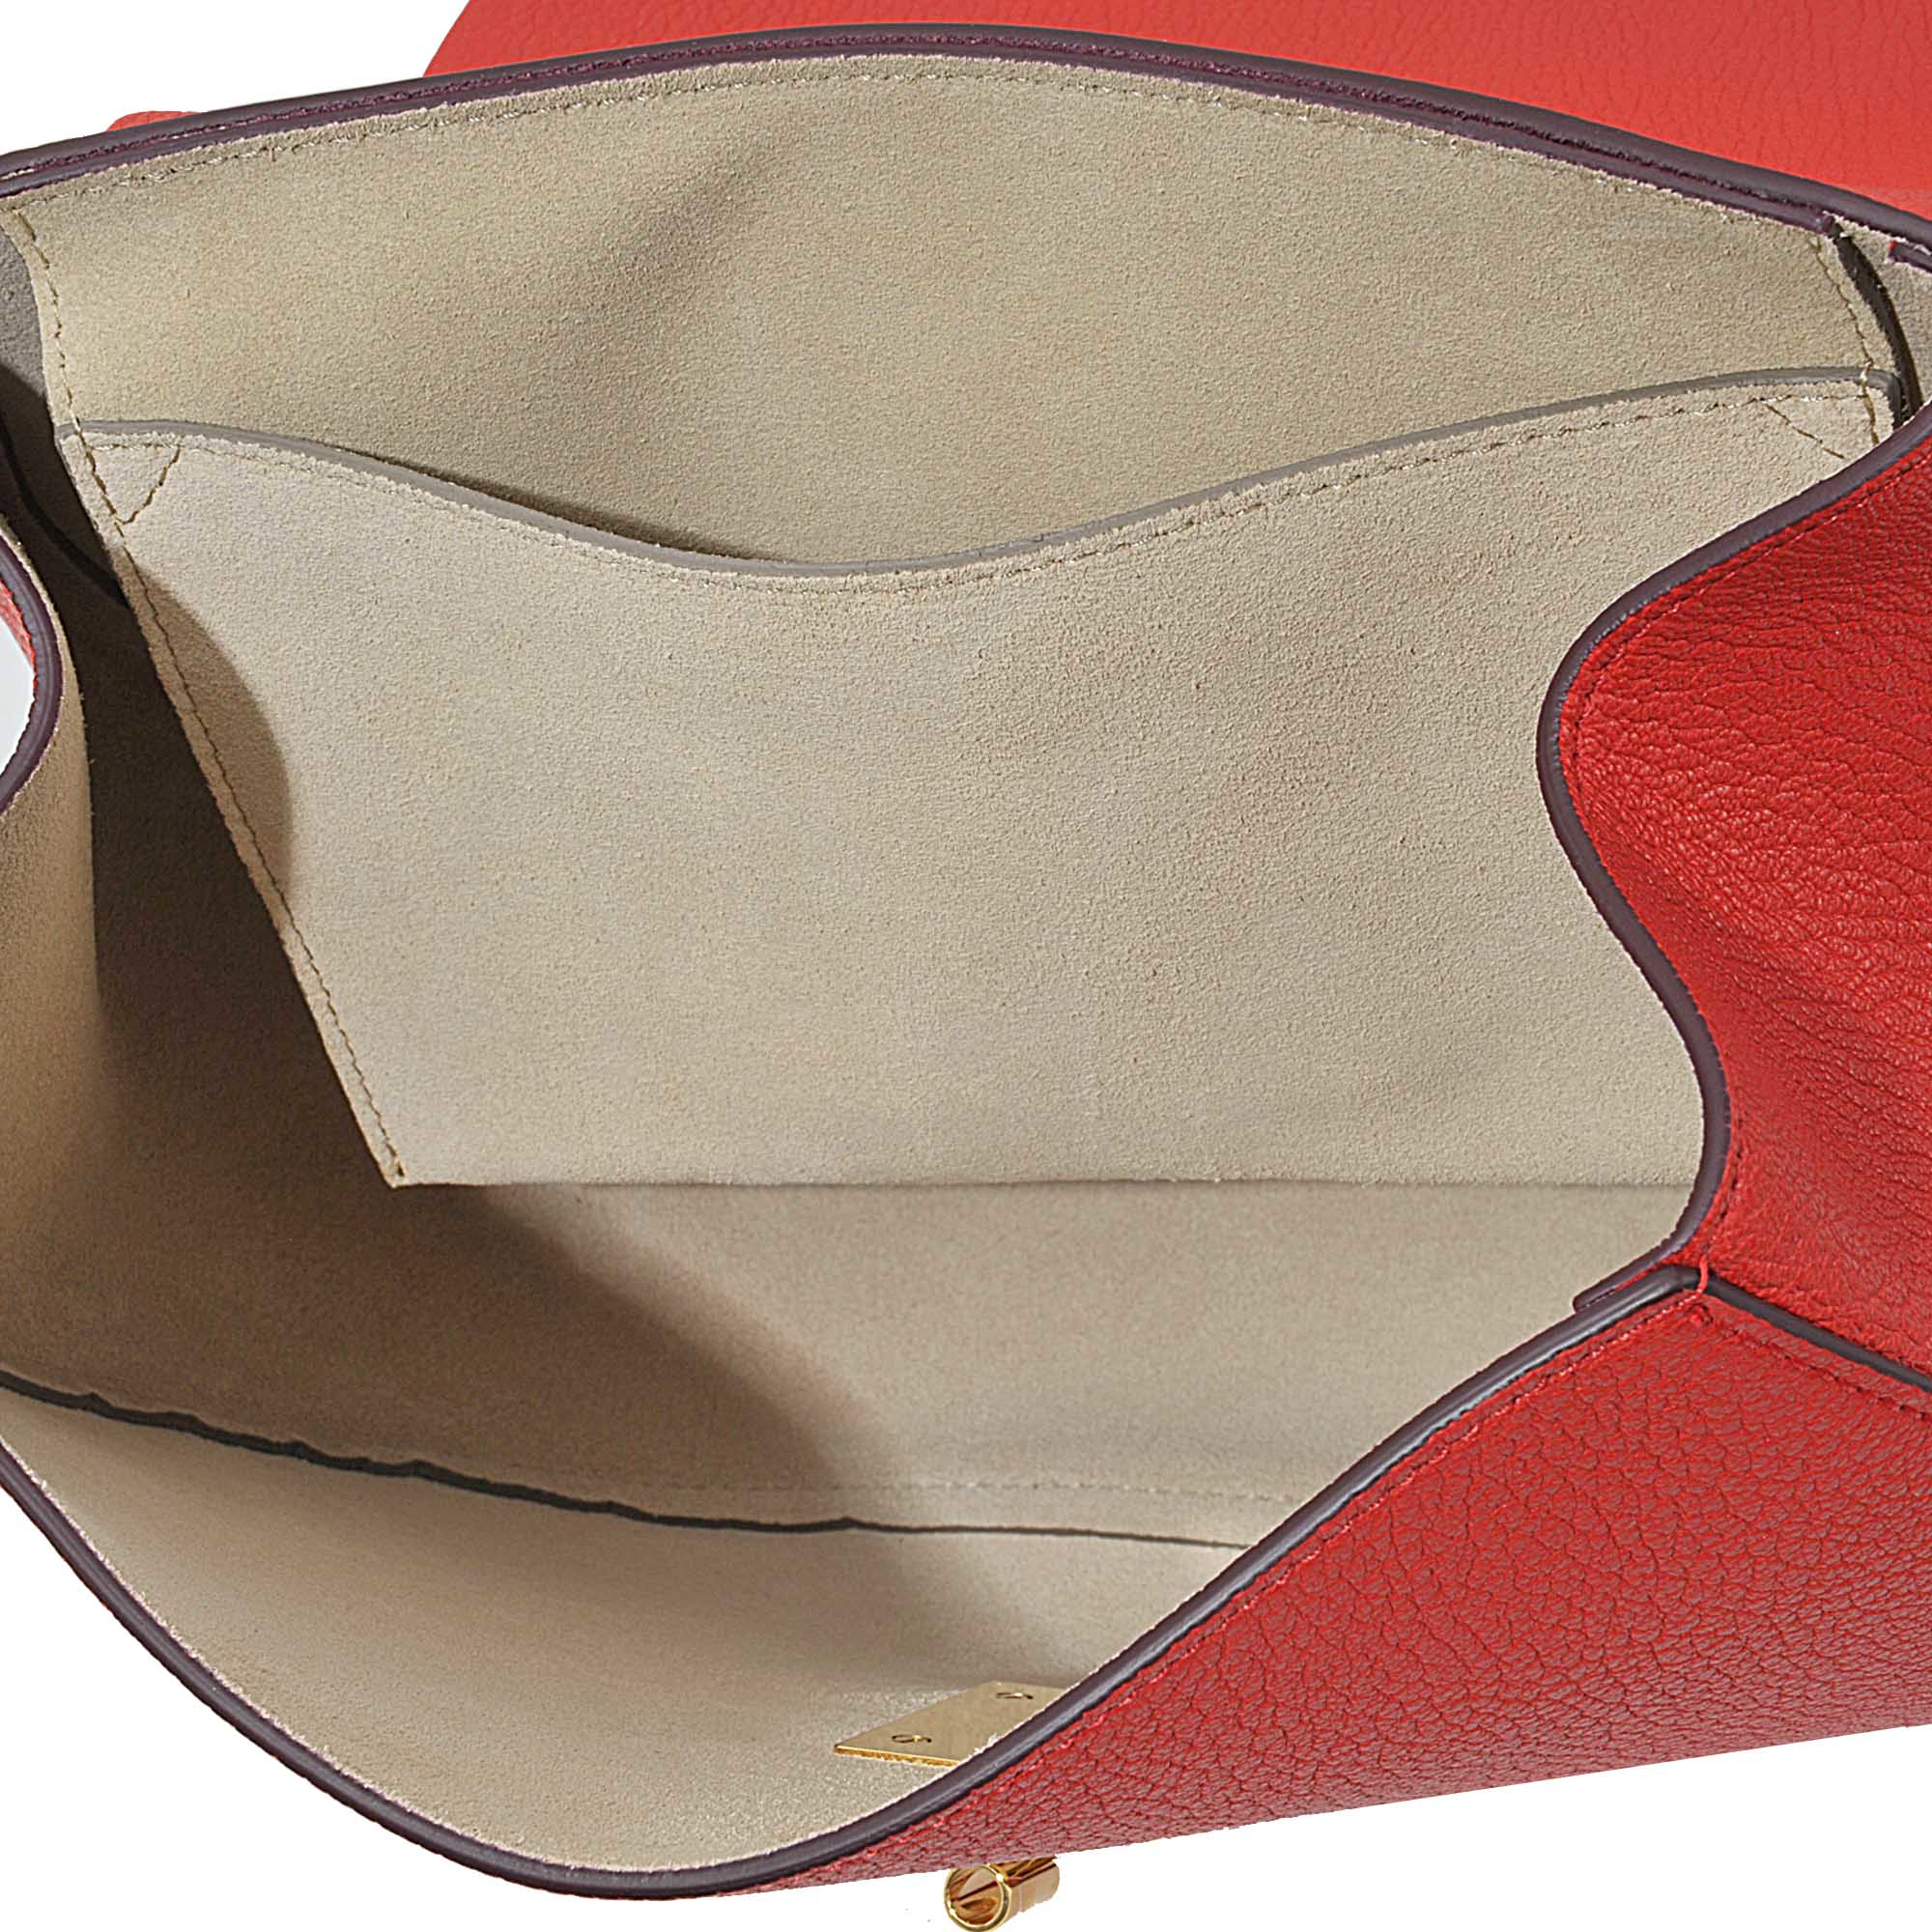 Chlo Drew Medium Saddle Bag in Red | Lyst